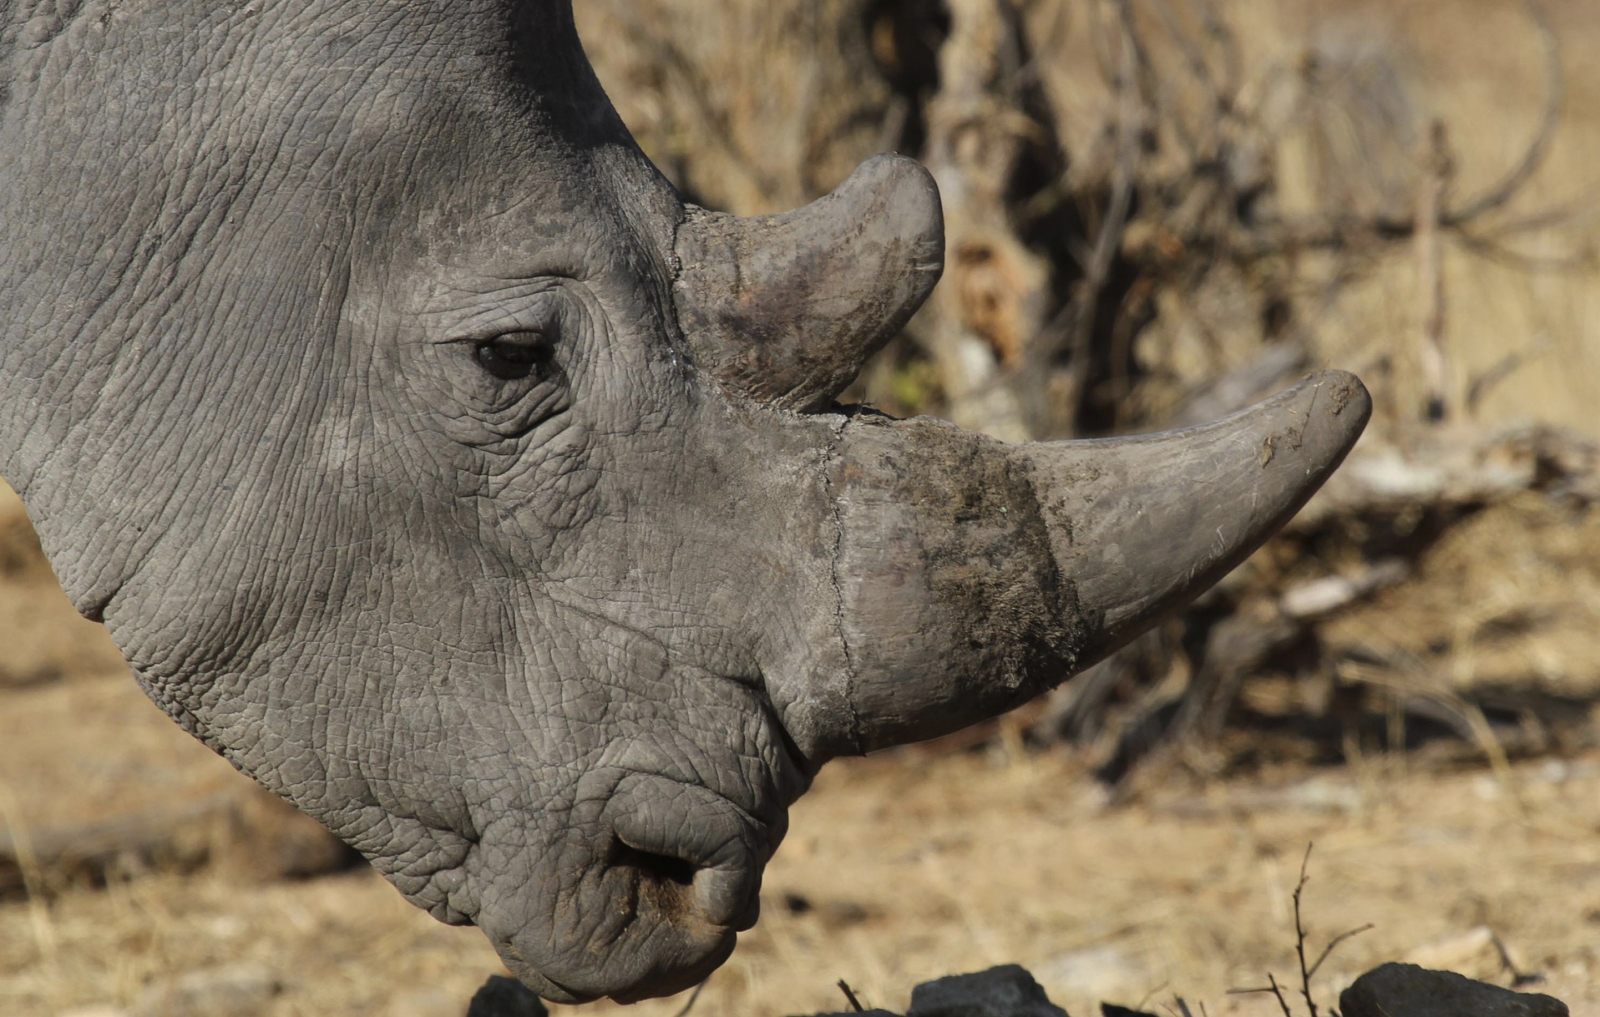 Elephant rhino. Нос носорога. Глаза носорога.